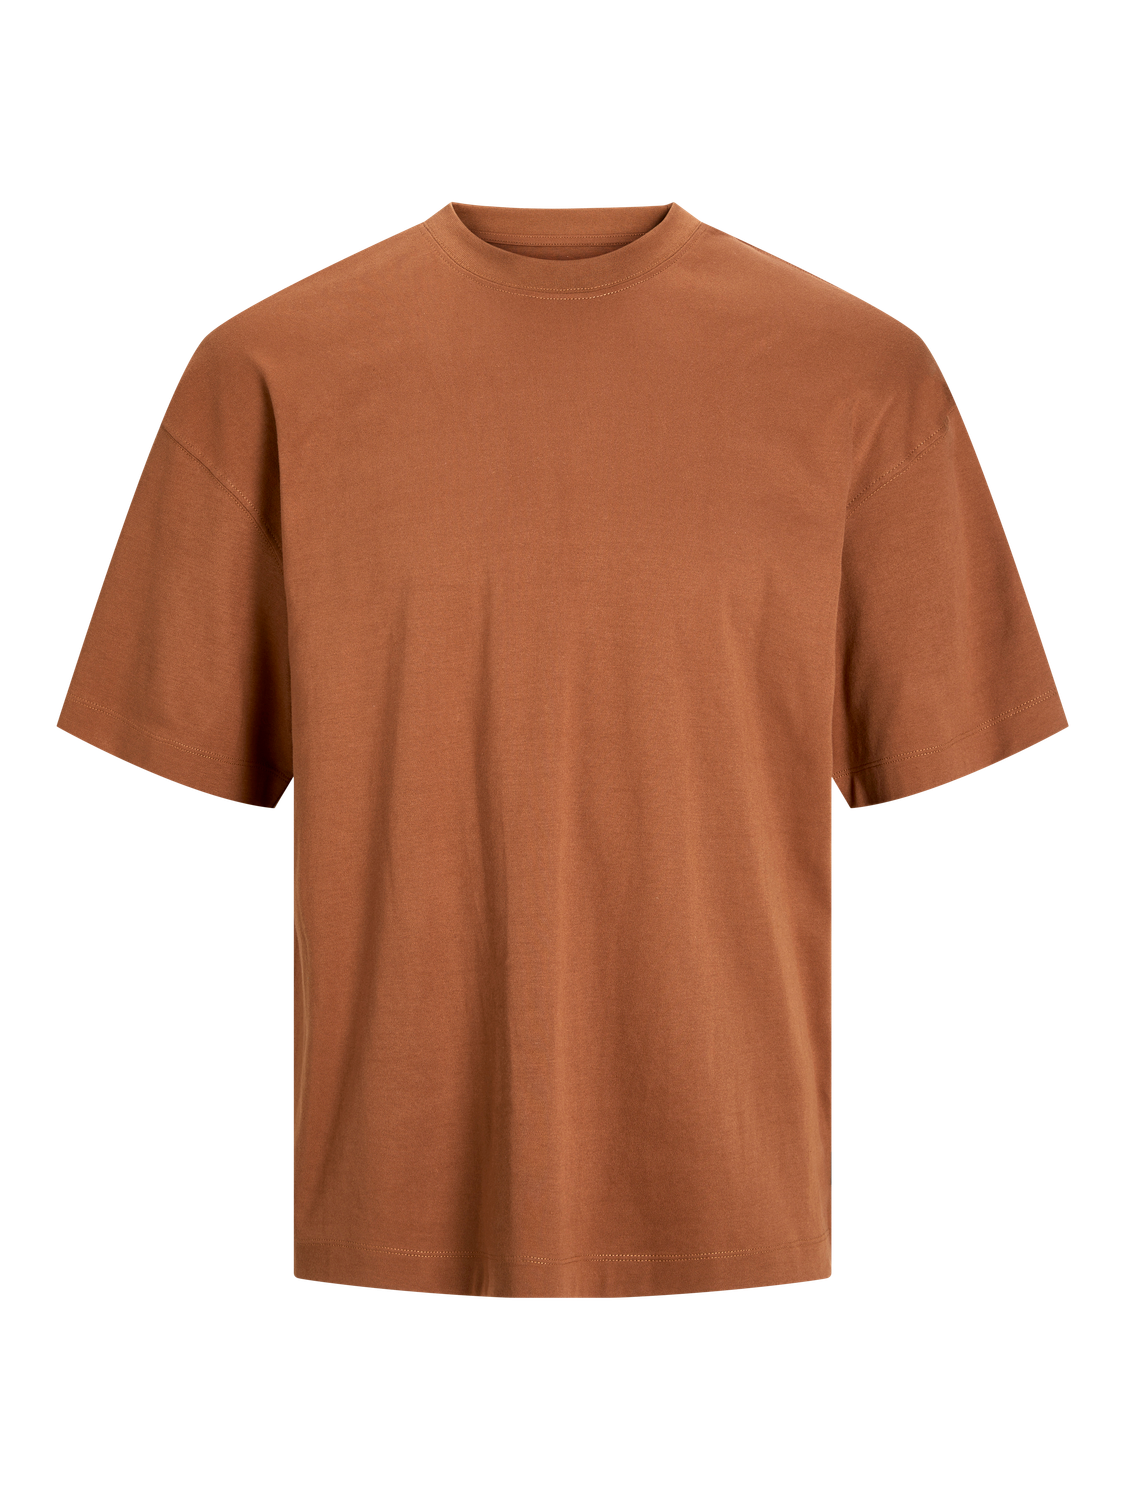 Jack & Jones T-shirt Liso Decote Redondo -Mocha Bisque - 12254412